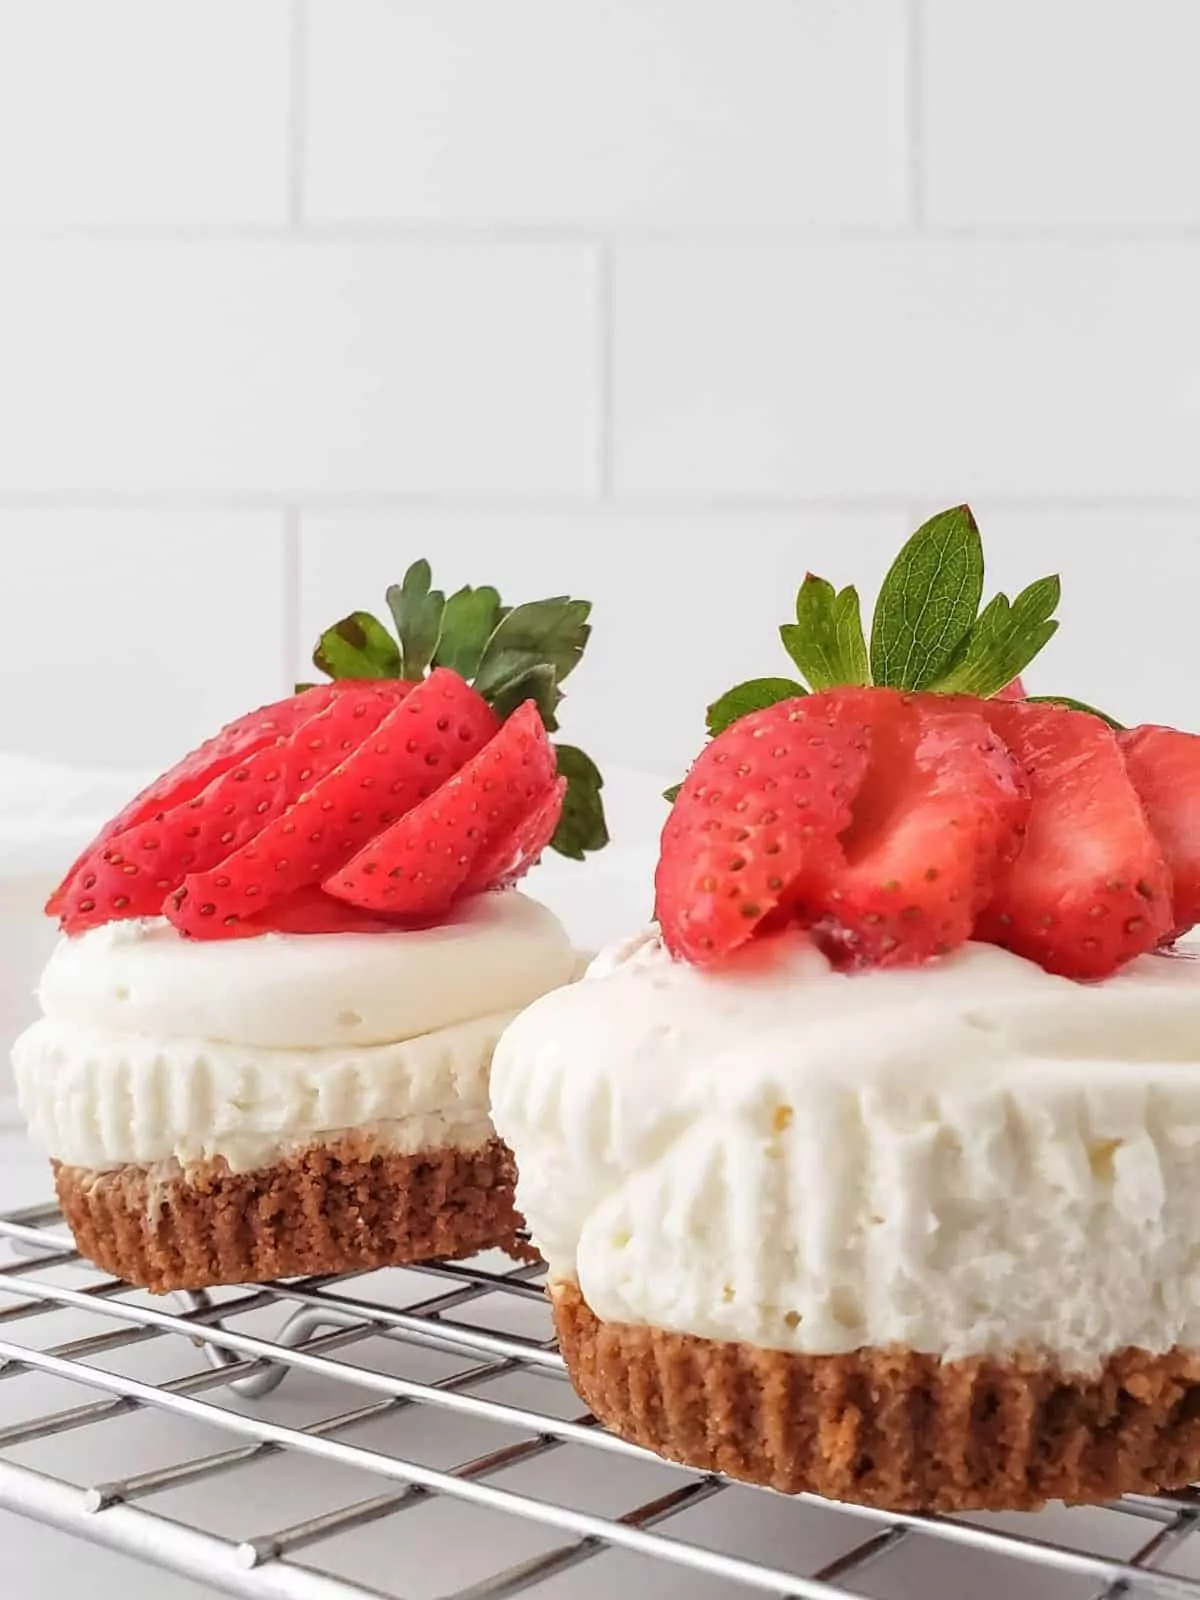 No bake cheesecake cupcakes with strawberries.